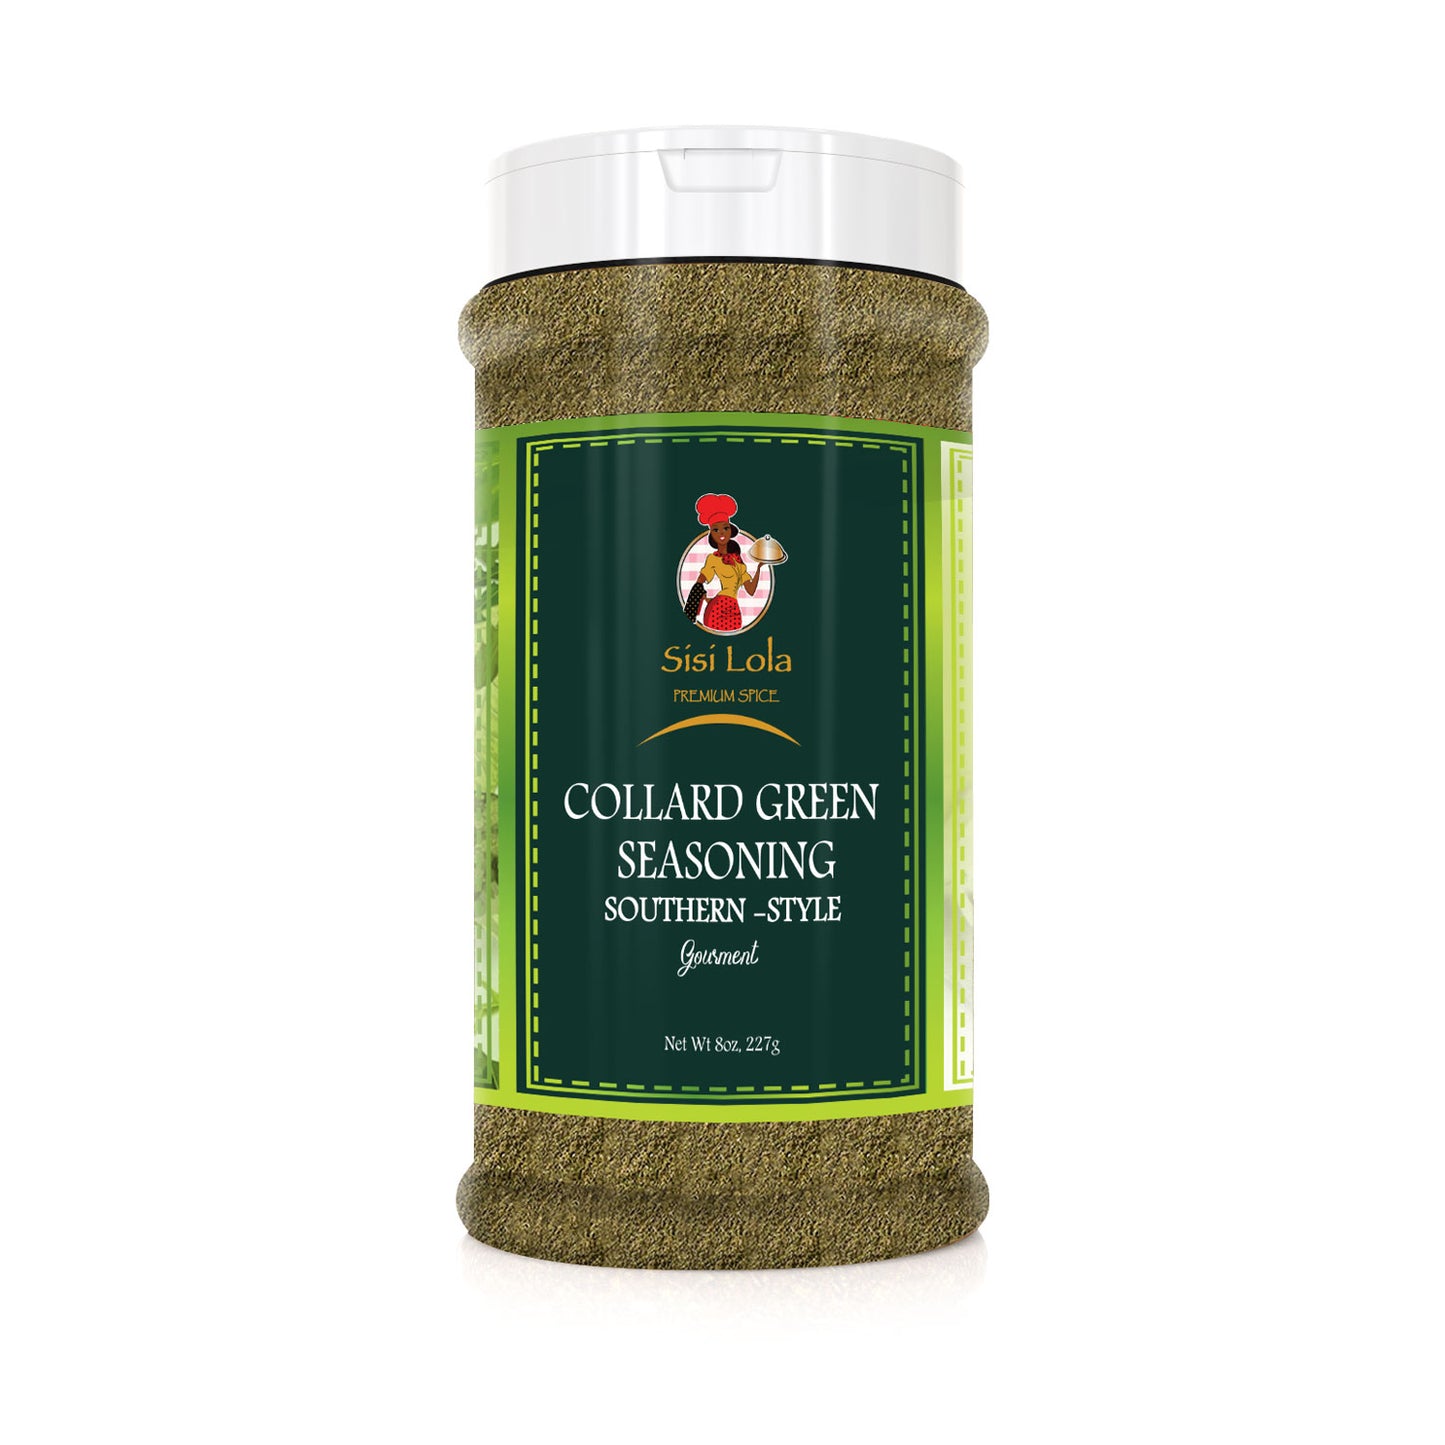 Feisty Spices Collard Green Seasoning, 8oz 